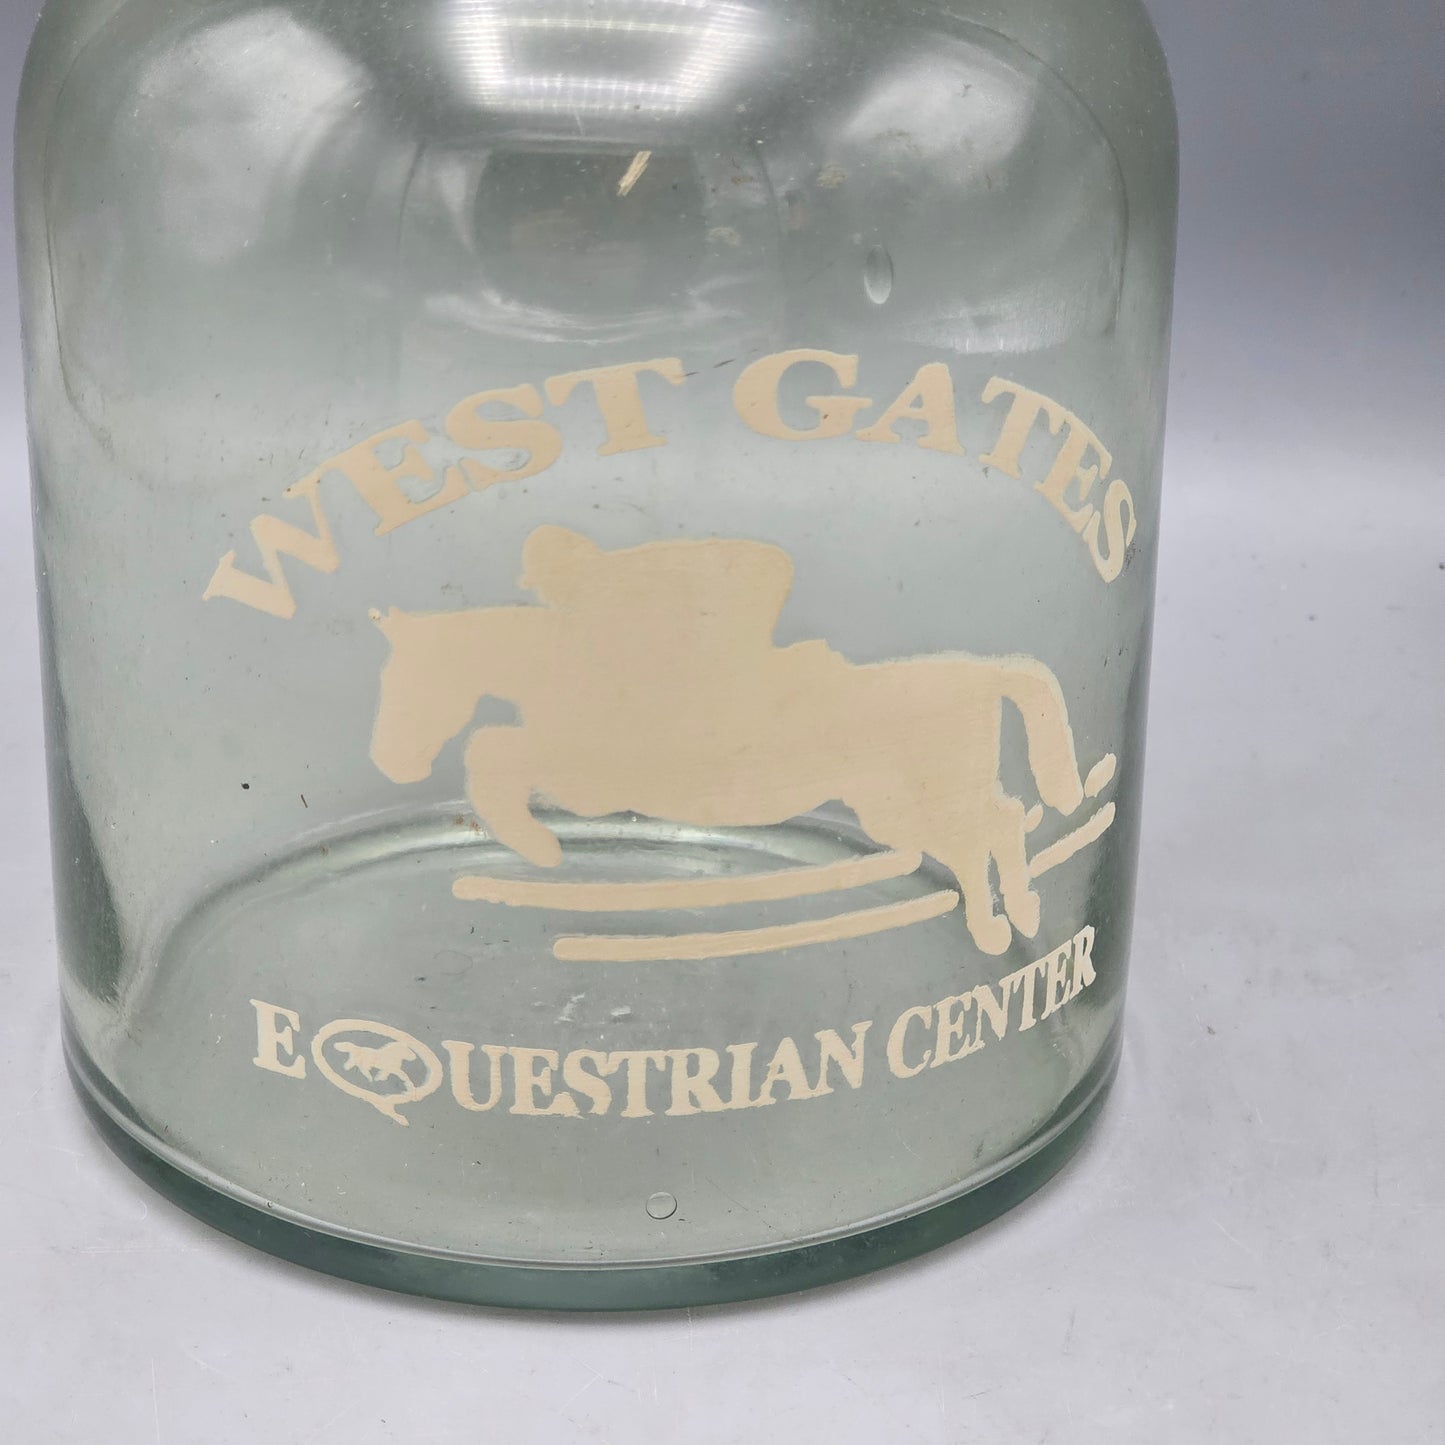 West Gate Equestrian Center Horse Jumping Glass Bottle